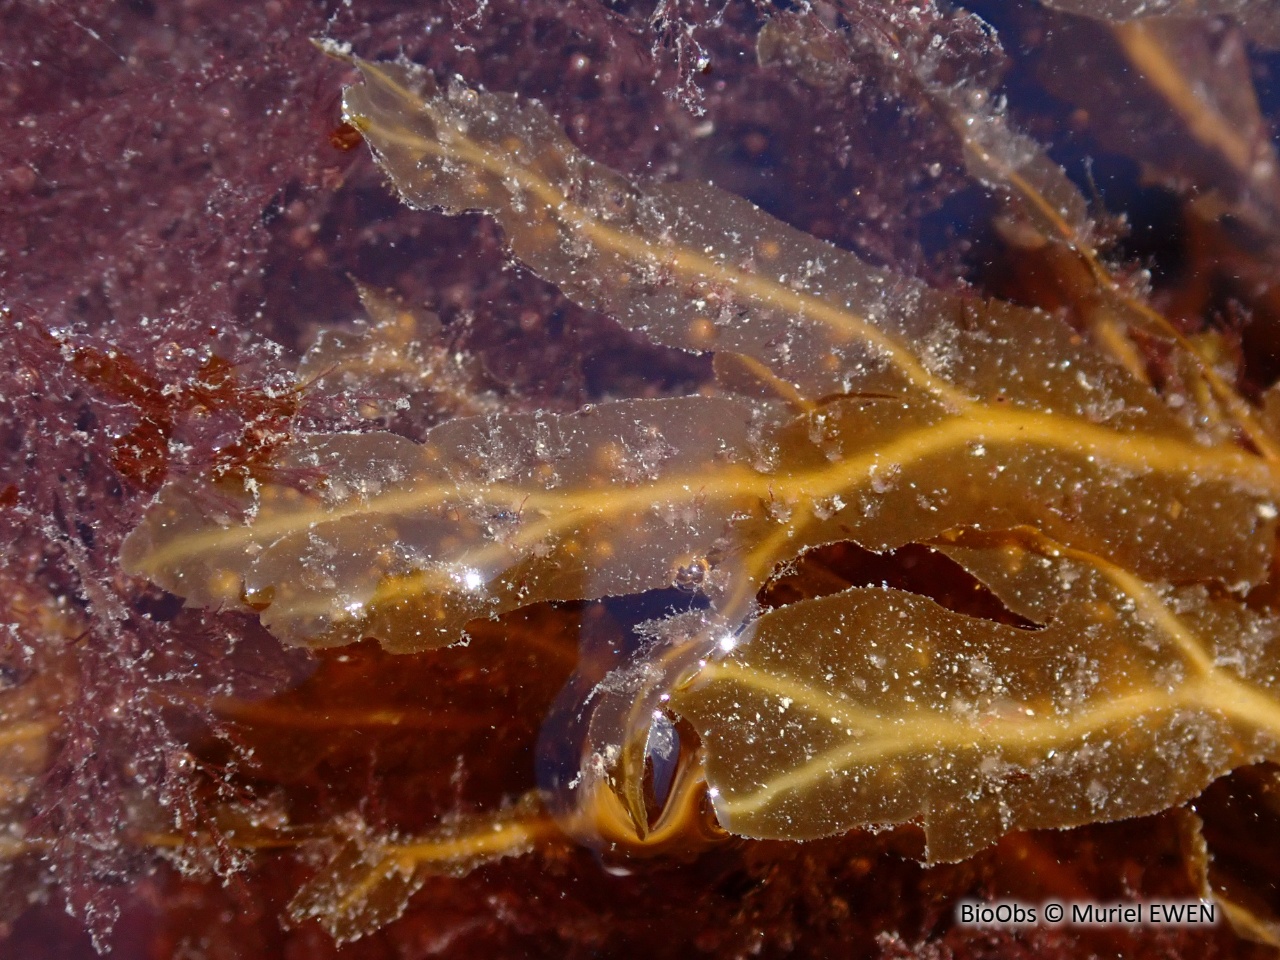 Fougère de mer - Dictyopteris polypodioides - Muriel EWEN - BioObs